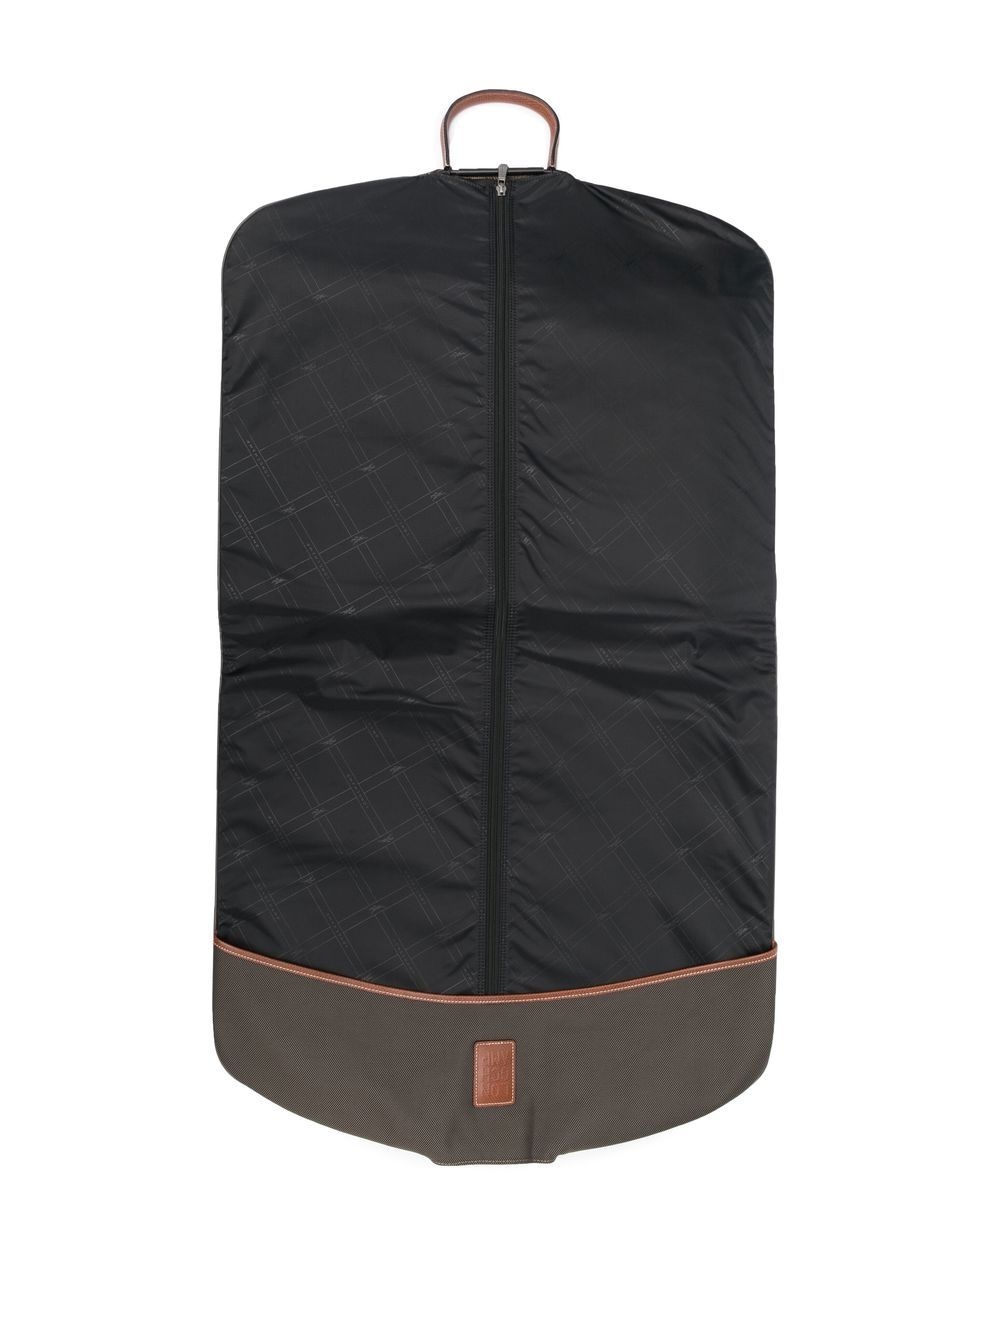 Boxford garment cover - 4